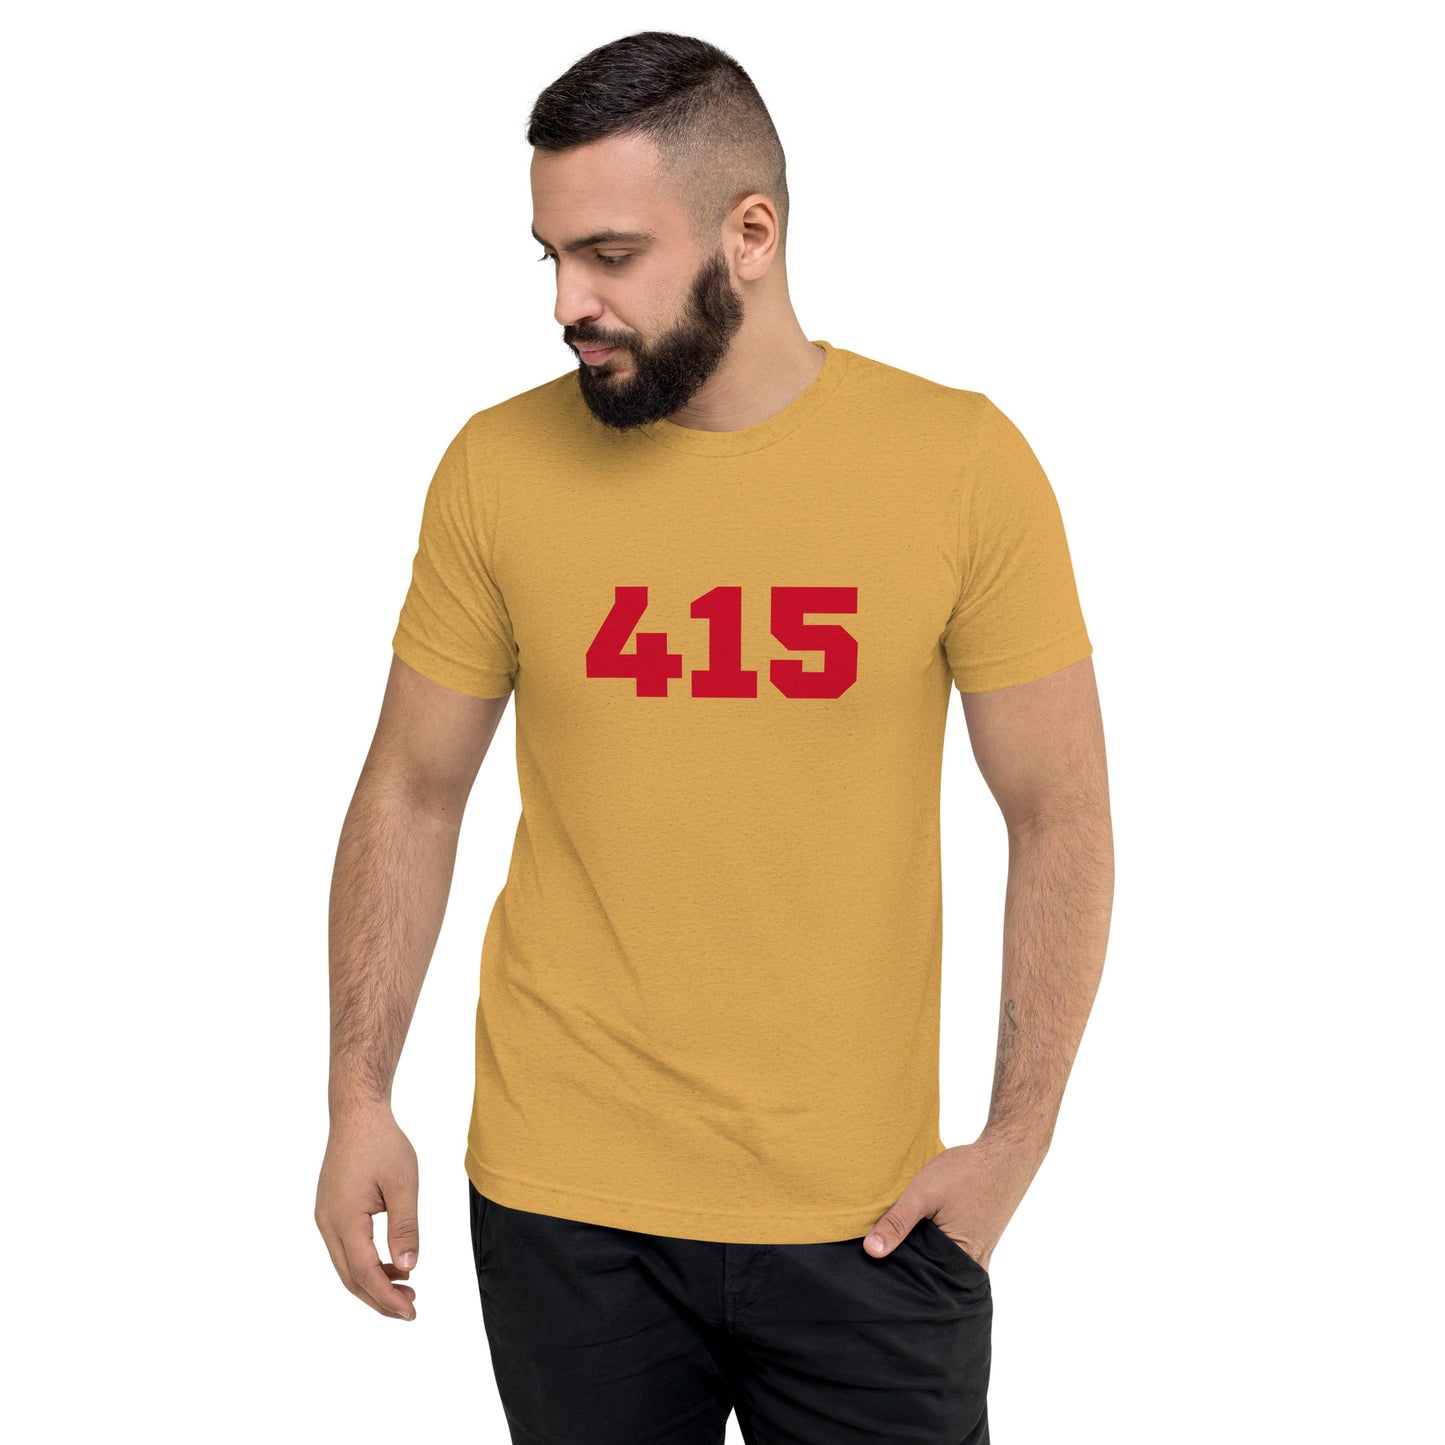 415 San Francisco Short Sleeve Tri-blend T-Shirt